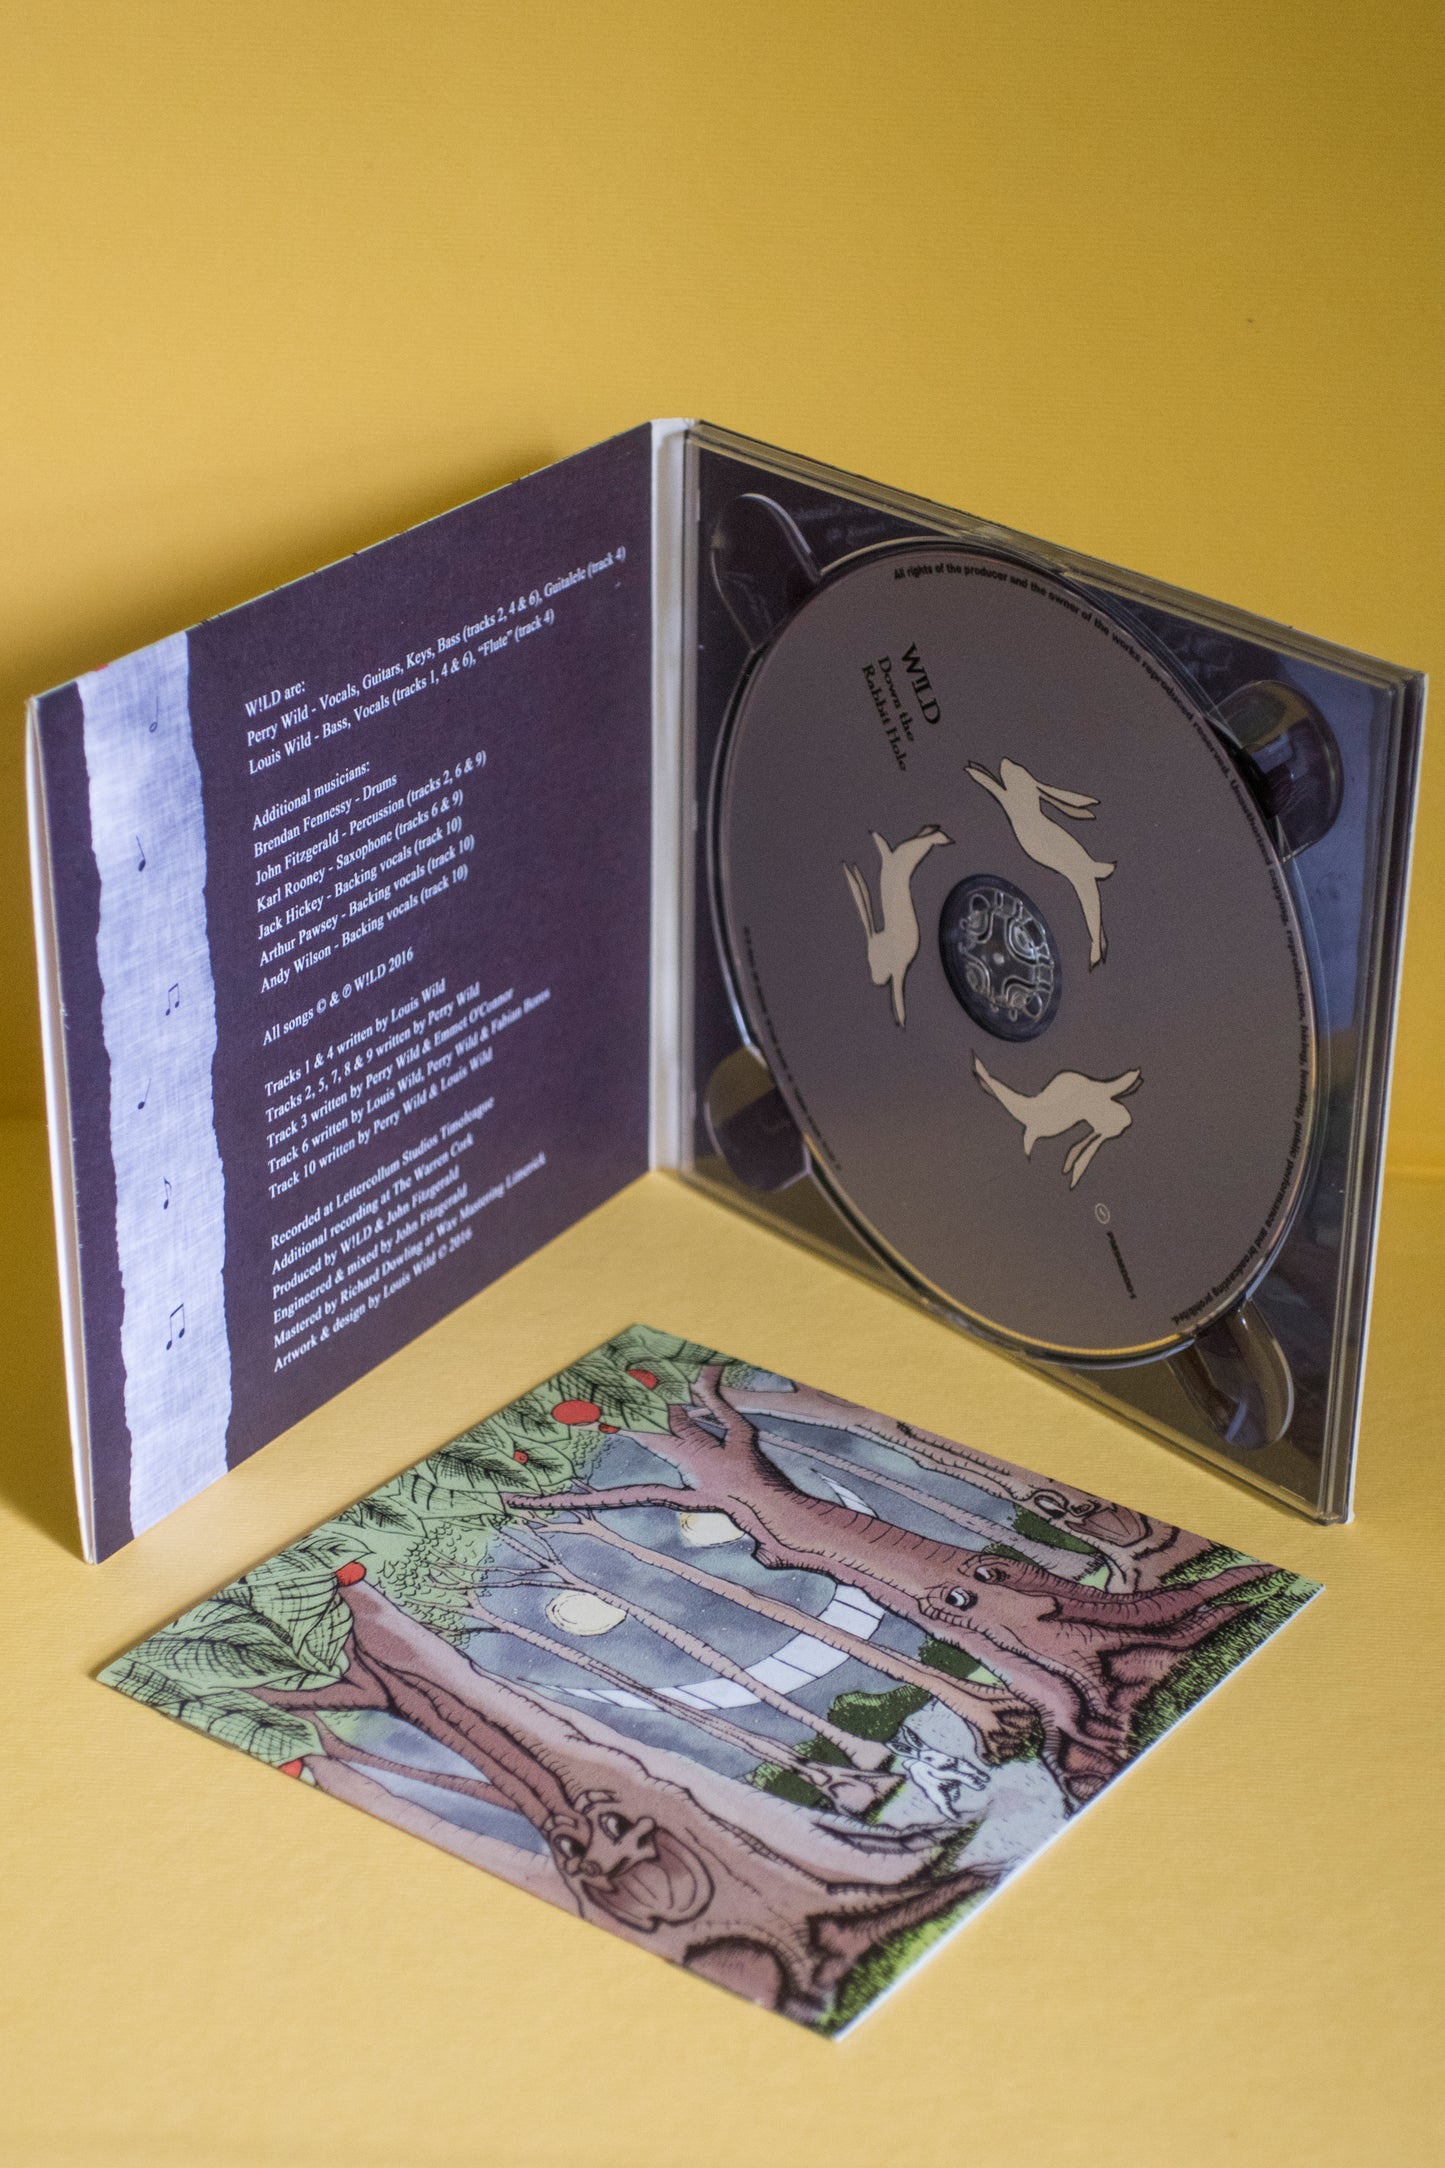 2. Down the Rabbit Hole Album CD